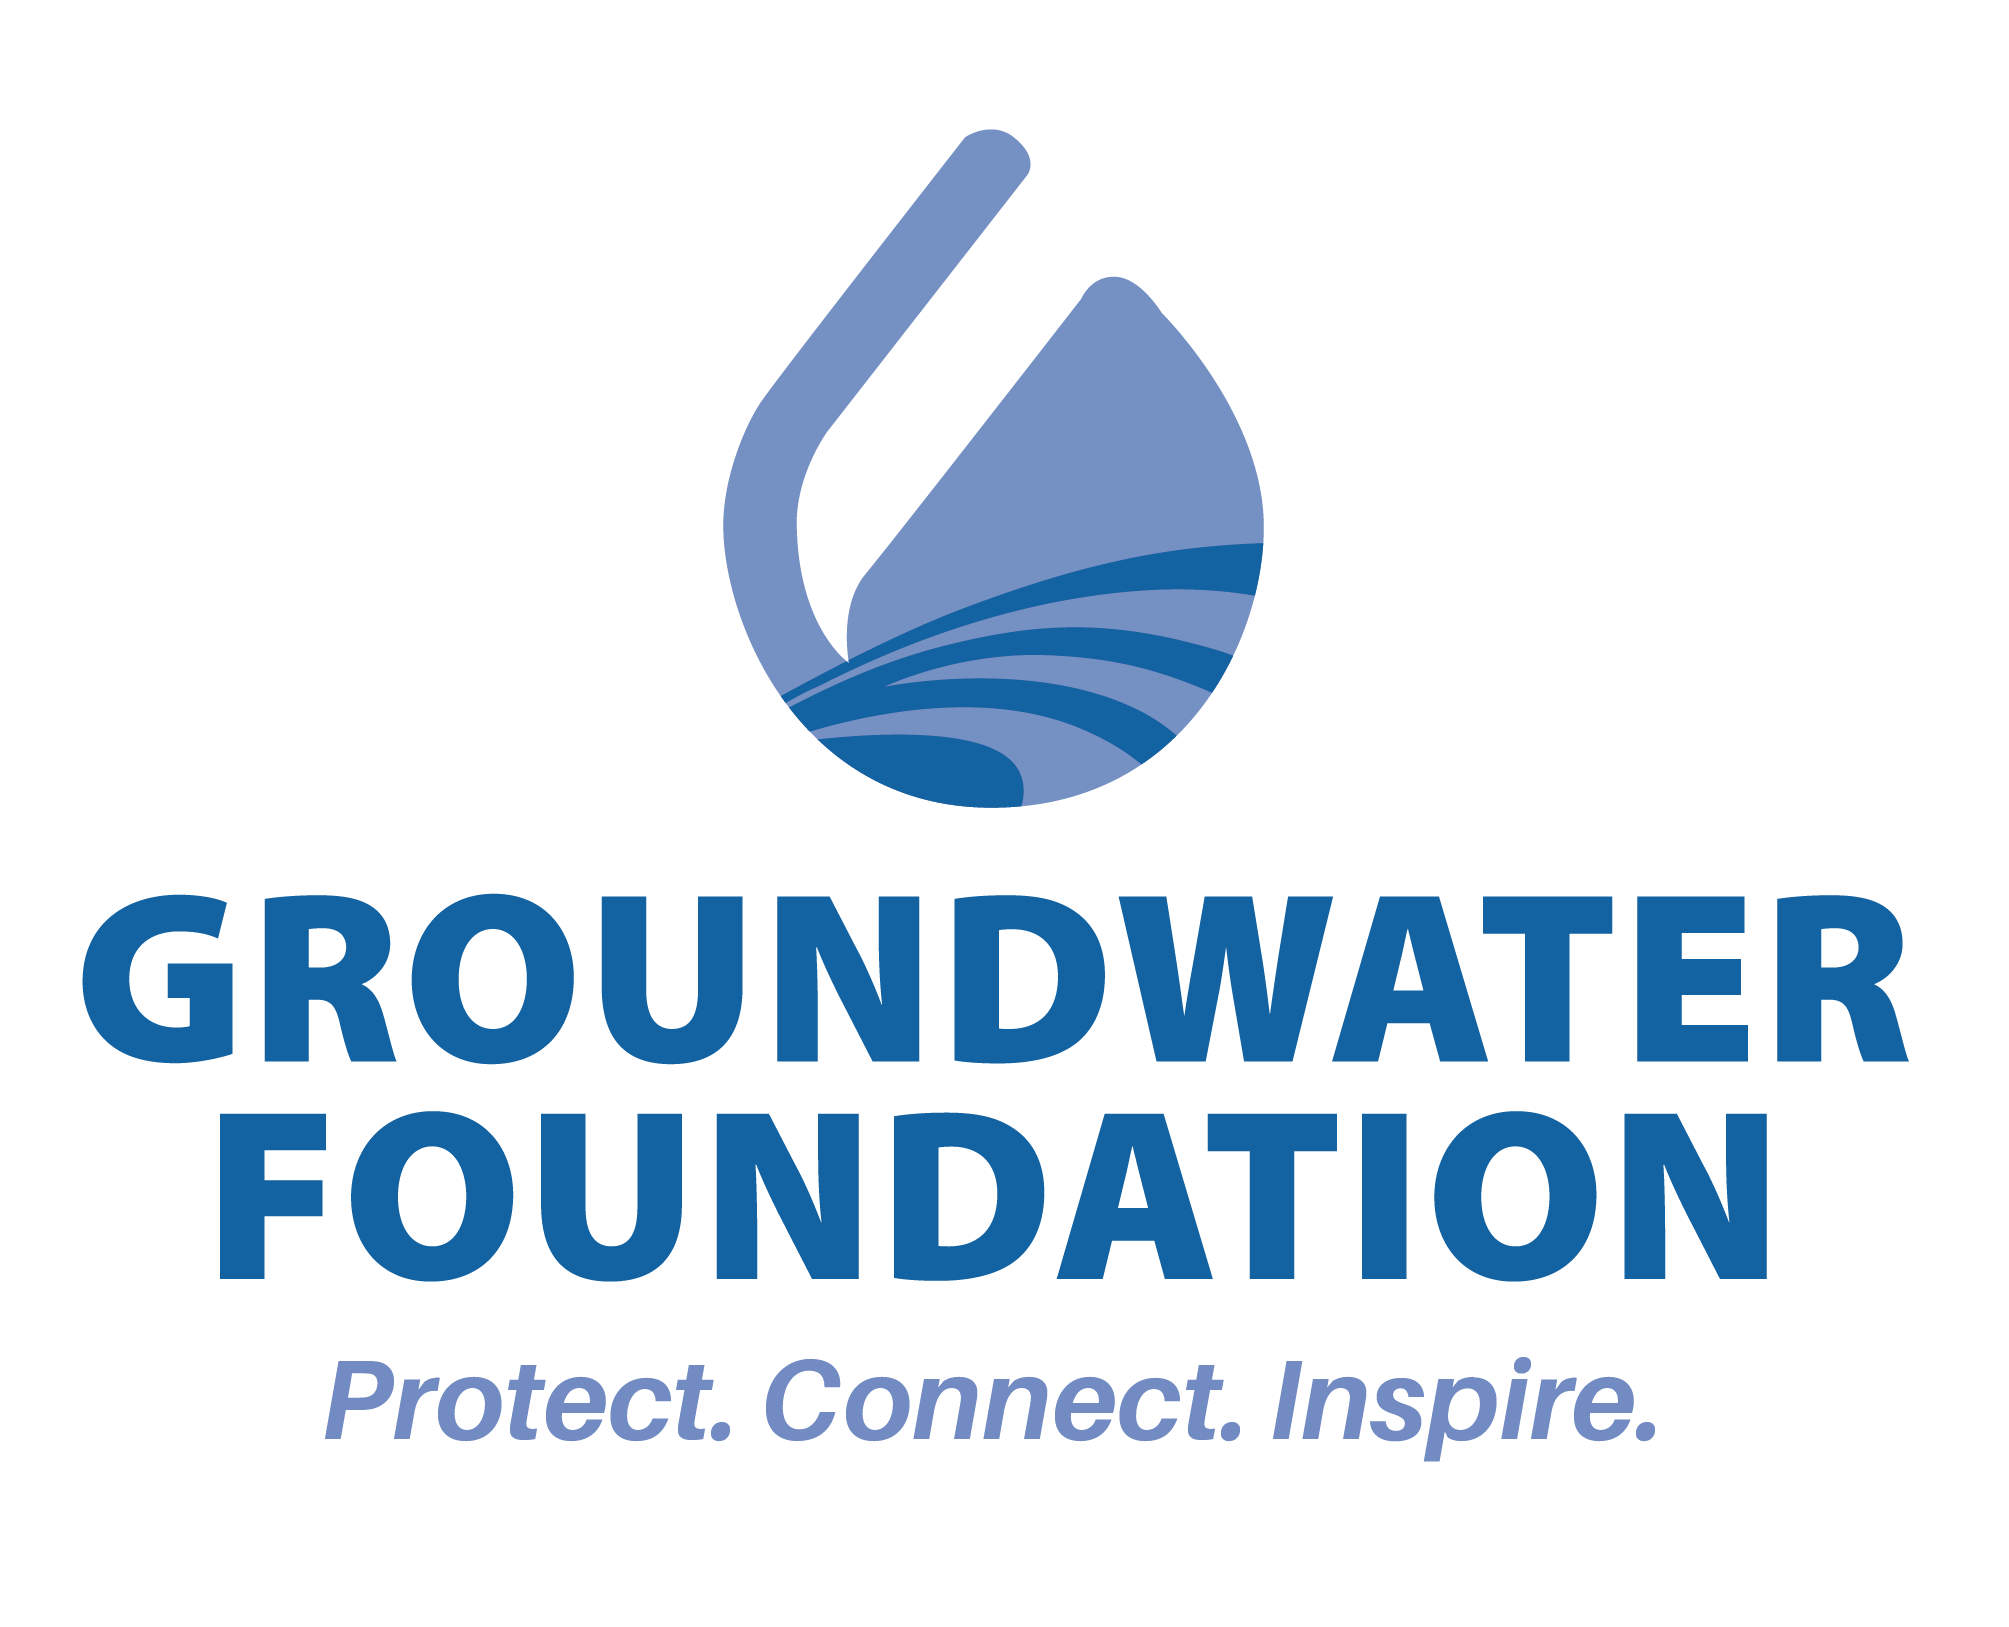 Groundwater Foundation drop logo P.C.I 1 01